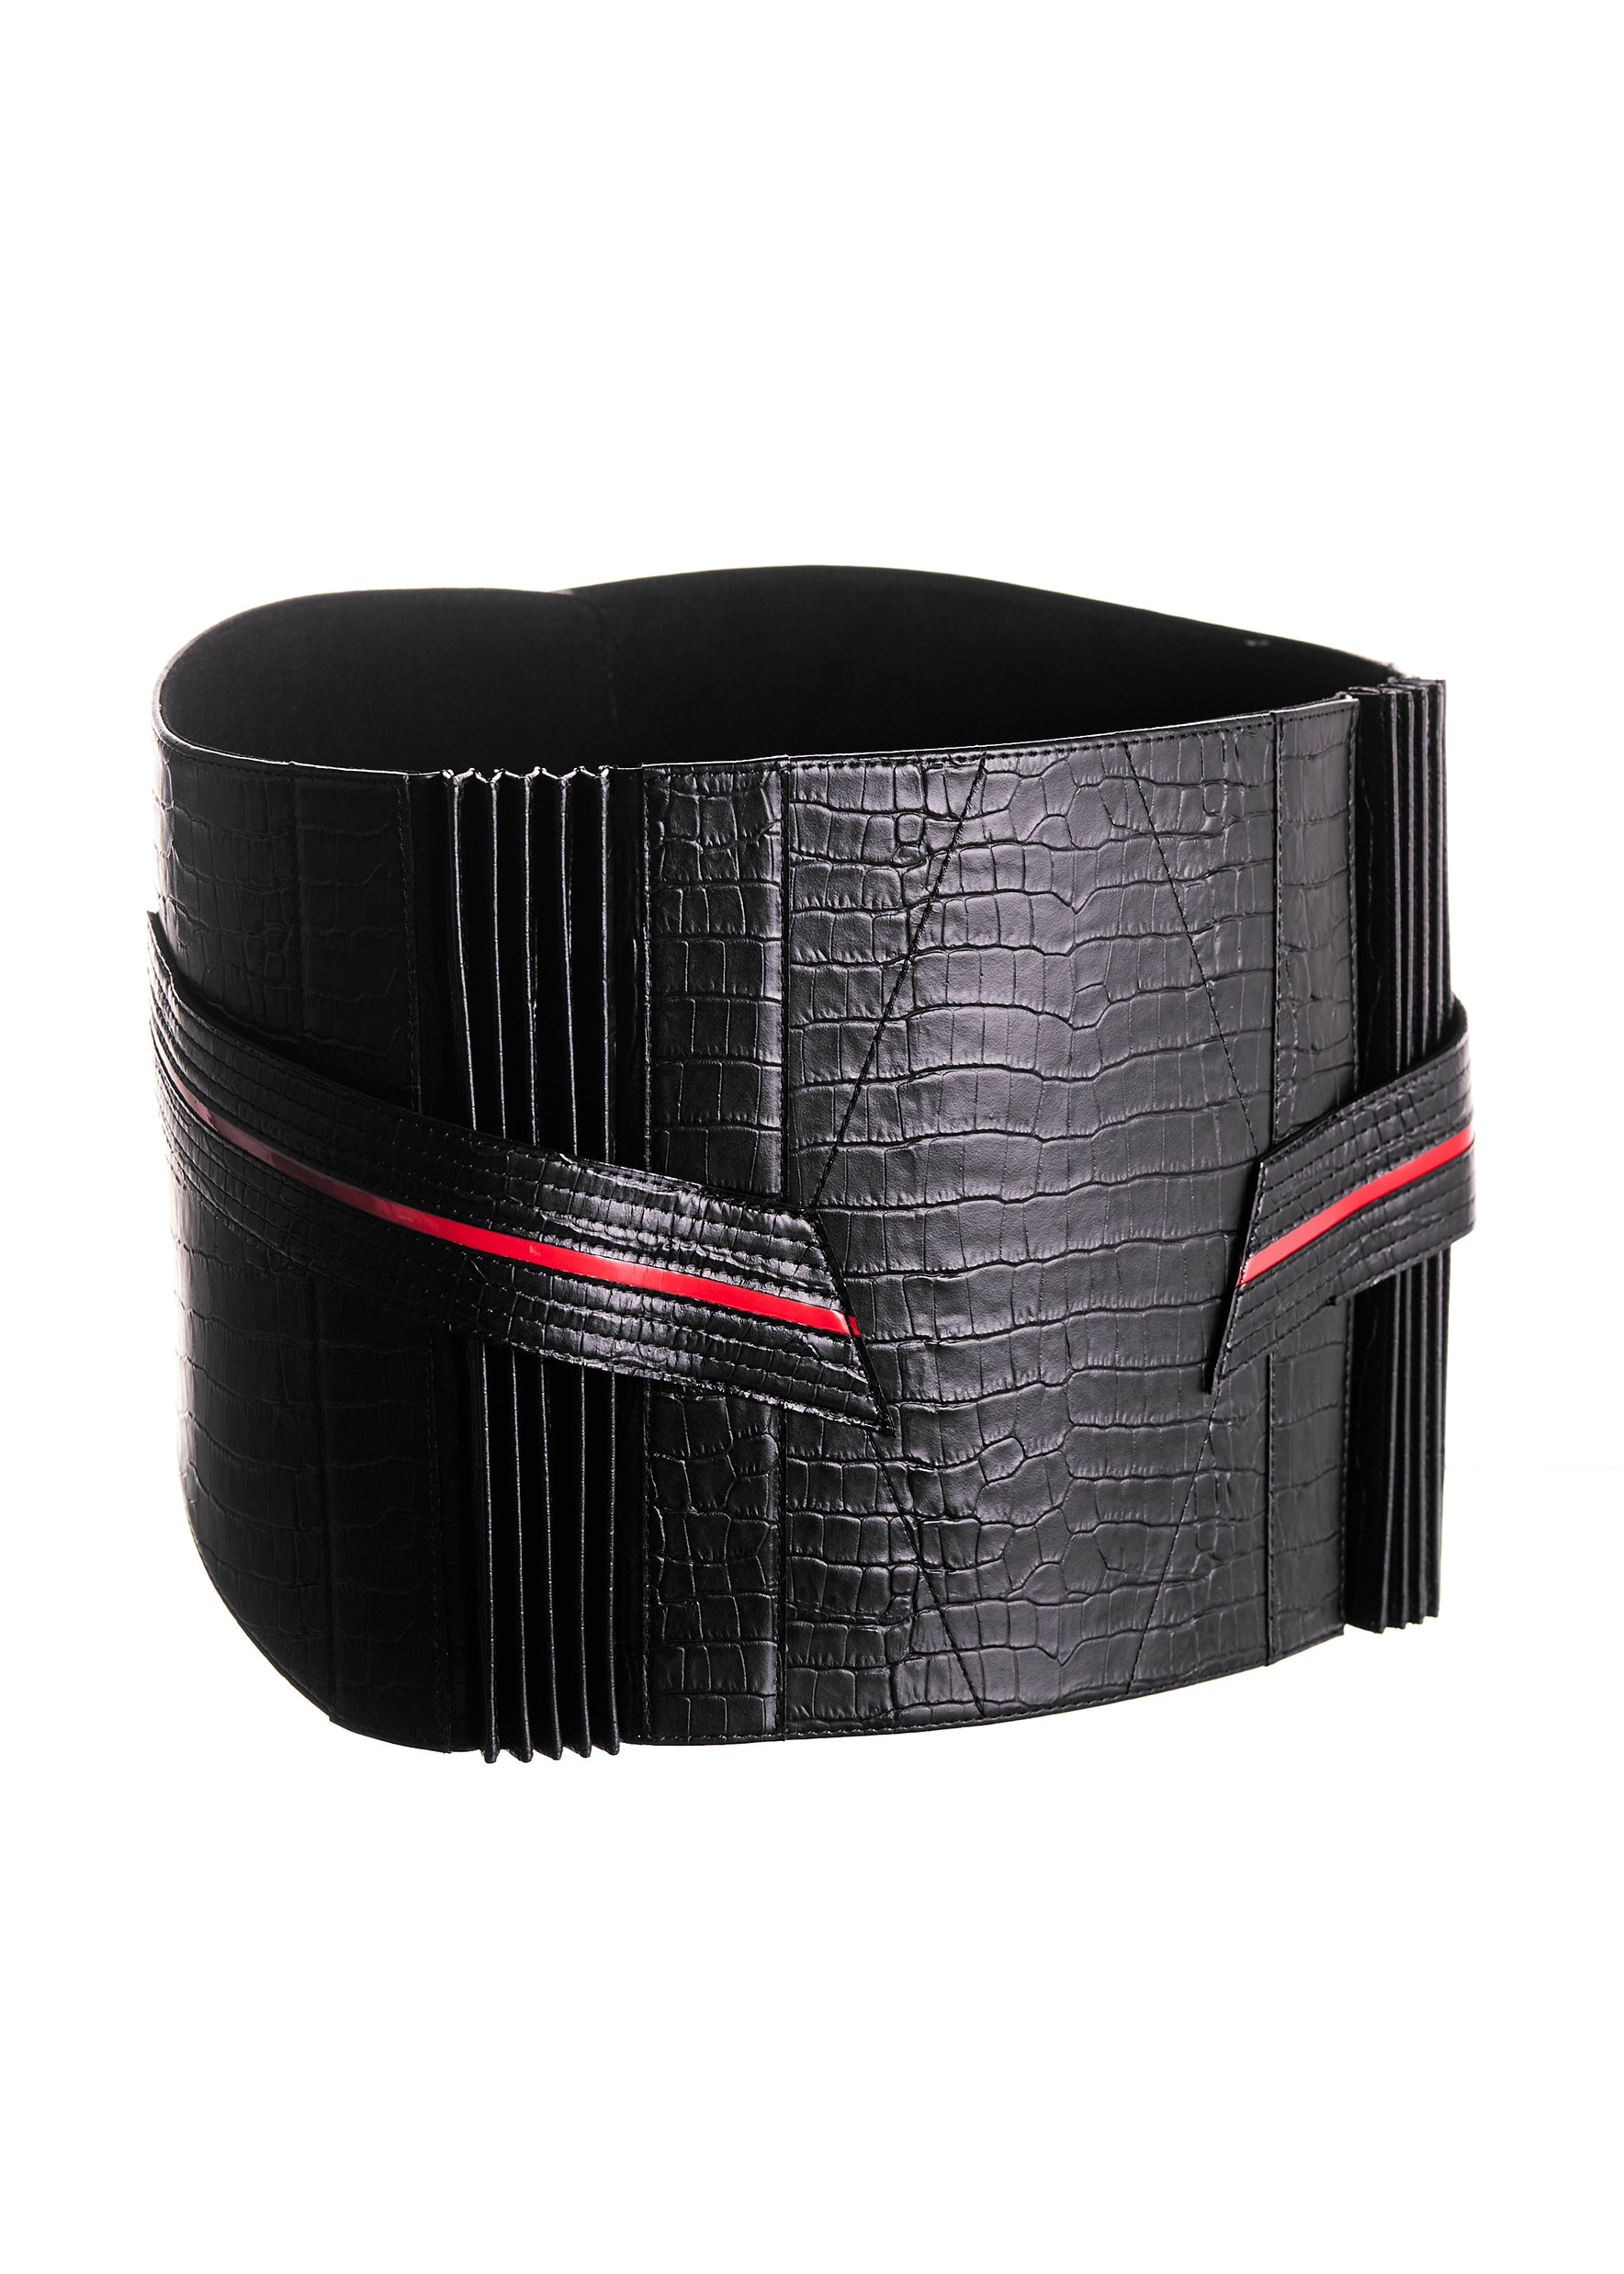 Obi belt "Croc matte black" leather